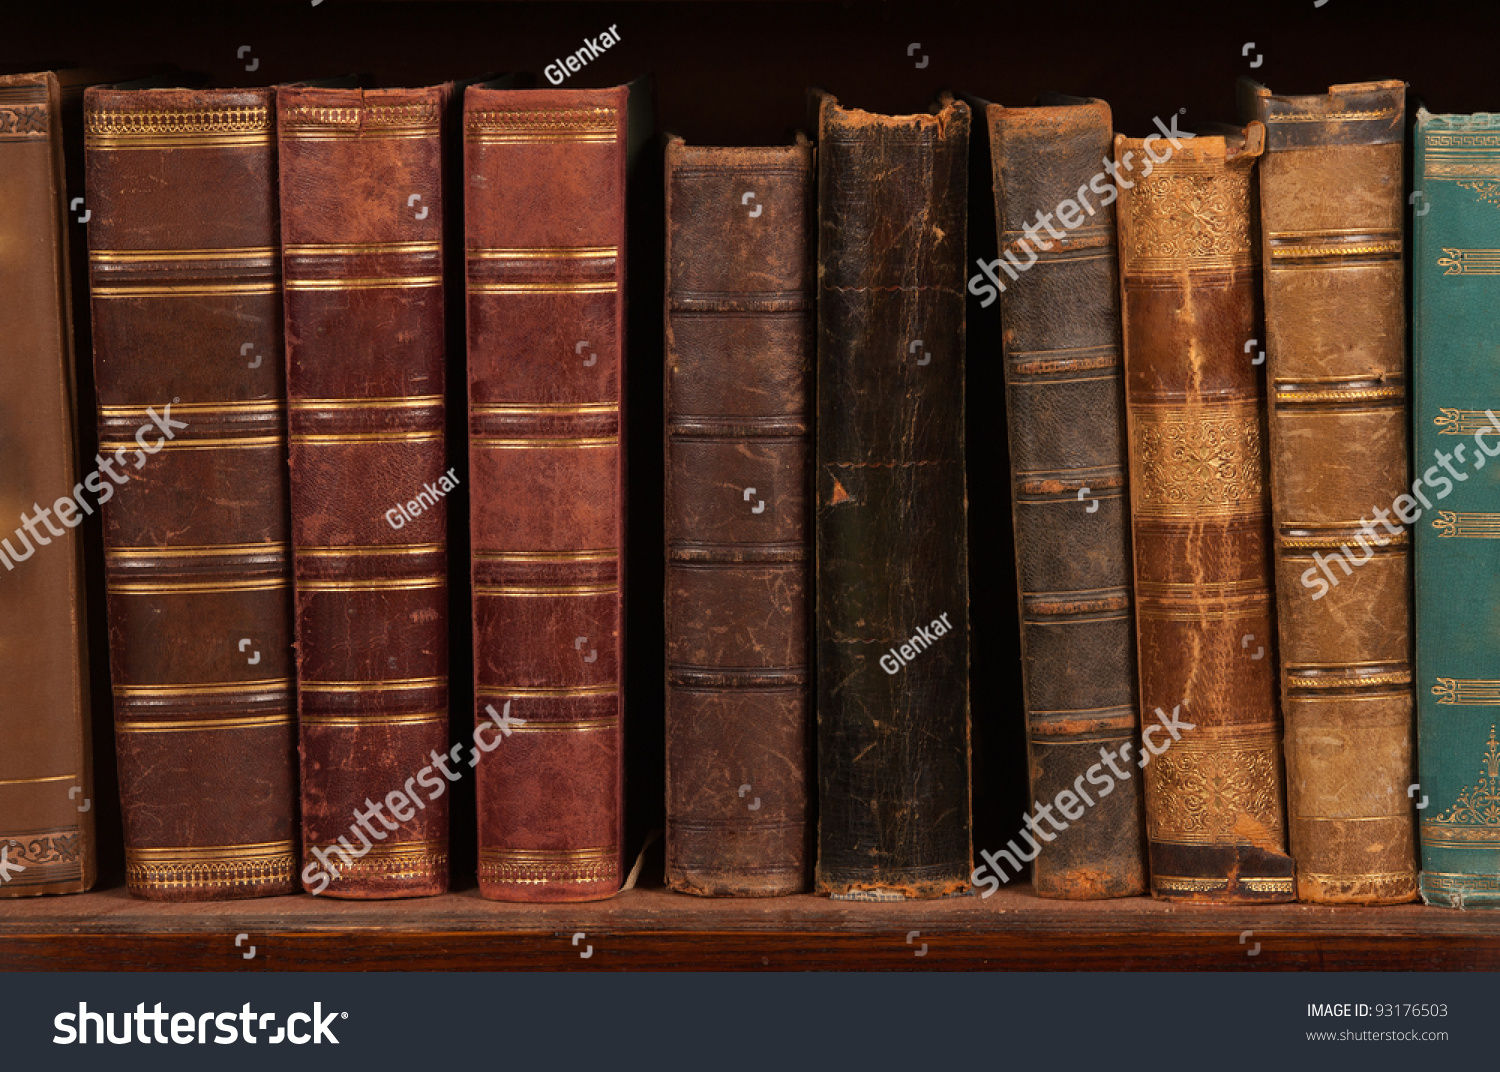 Antique books on bookshelf #93176503